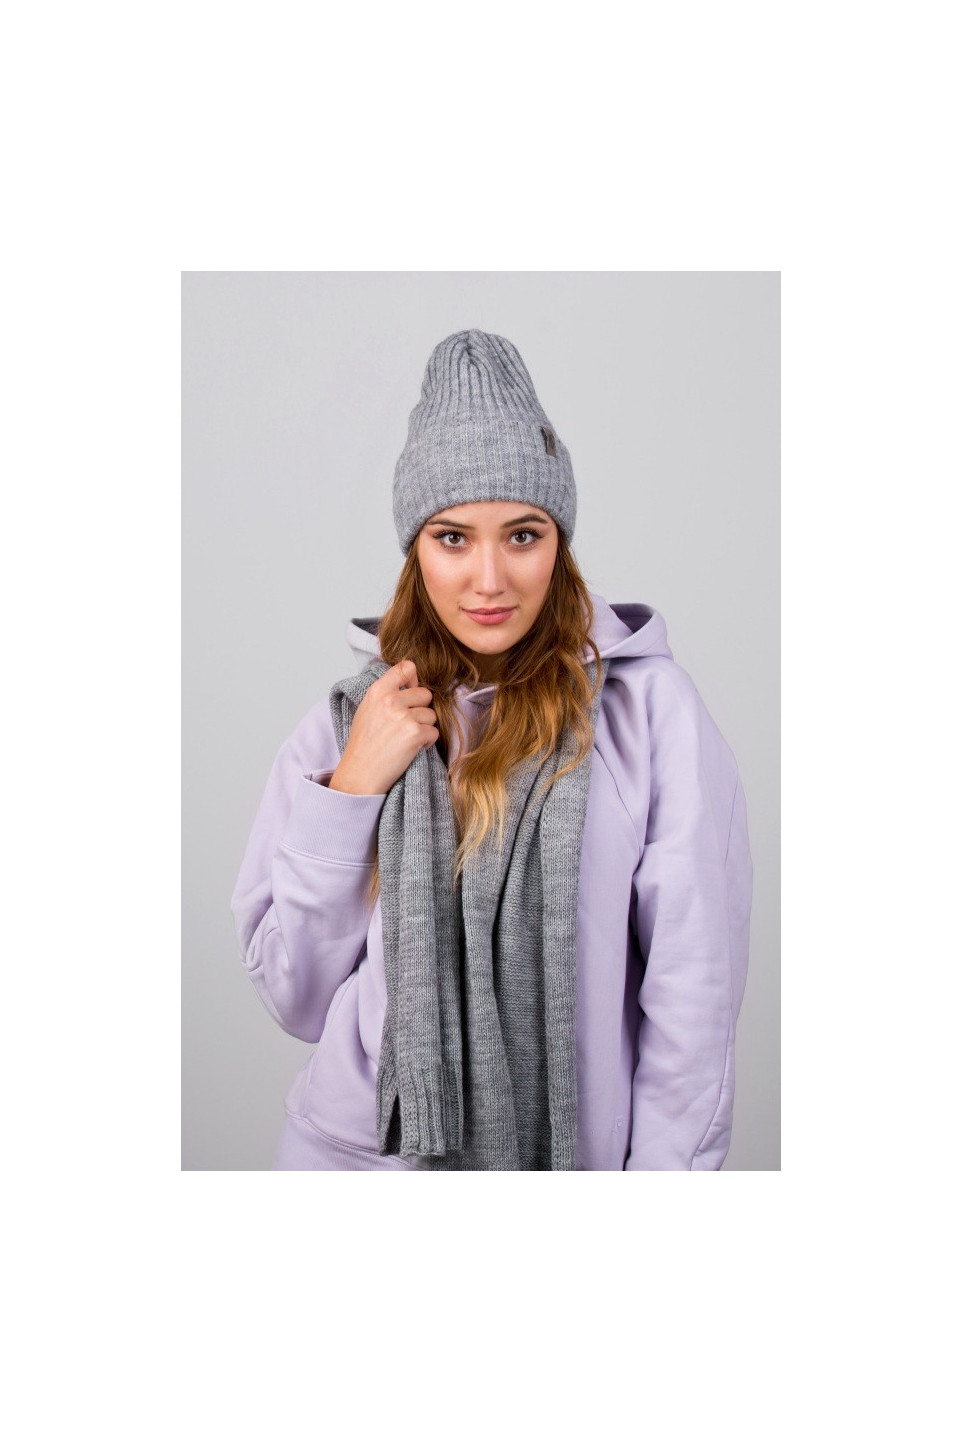 Winter scarf Kamiland Grey